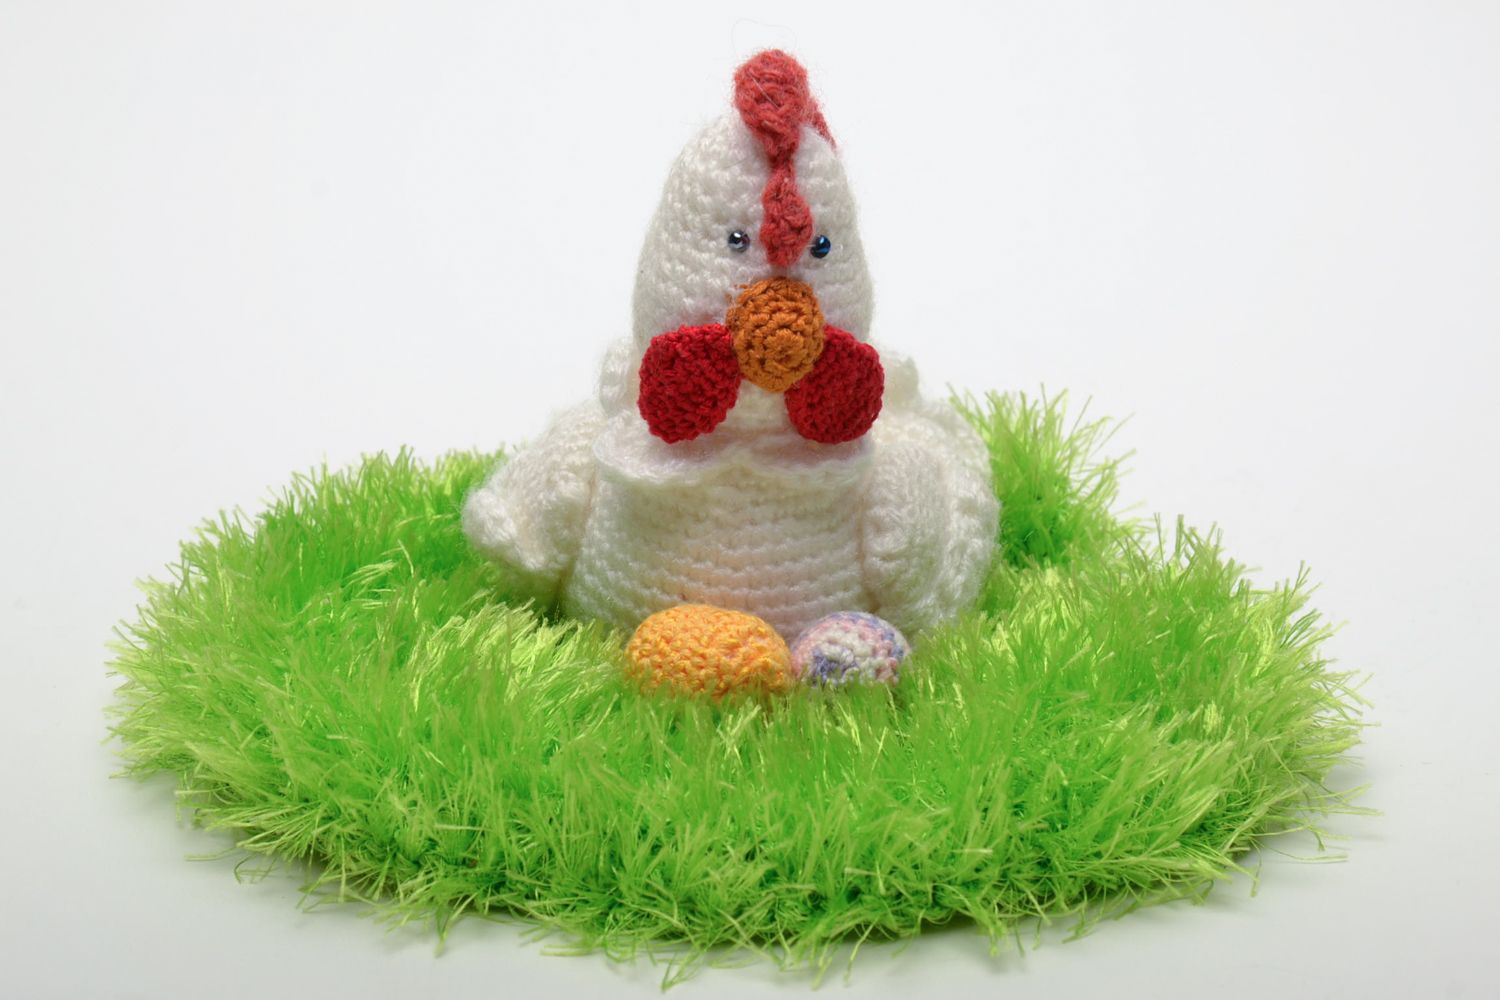 Soft crochet toy chicken photo 2